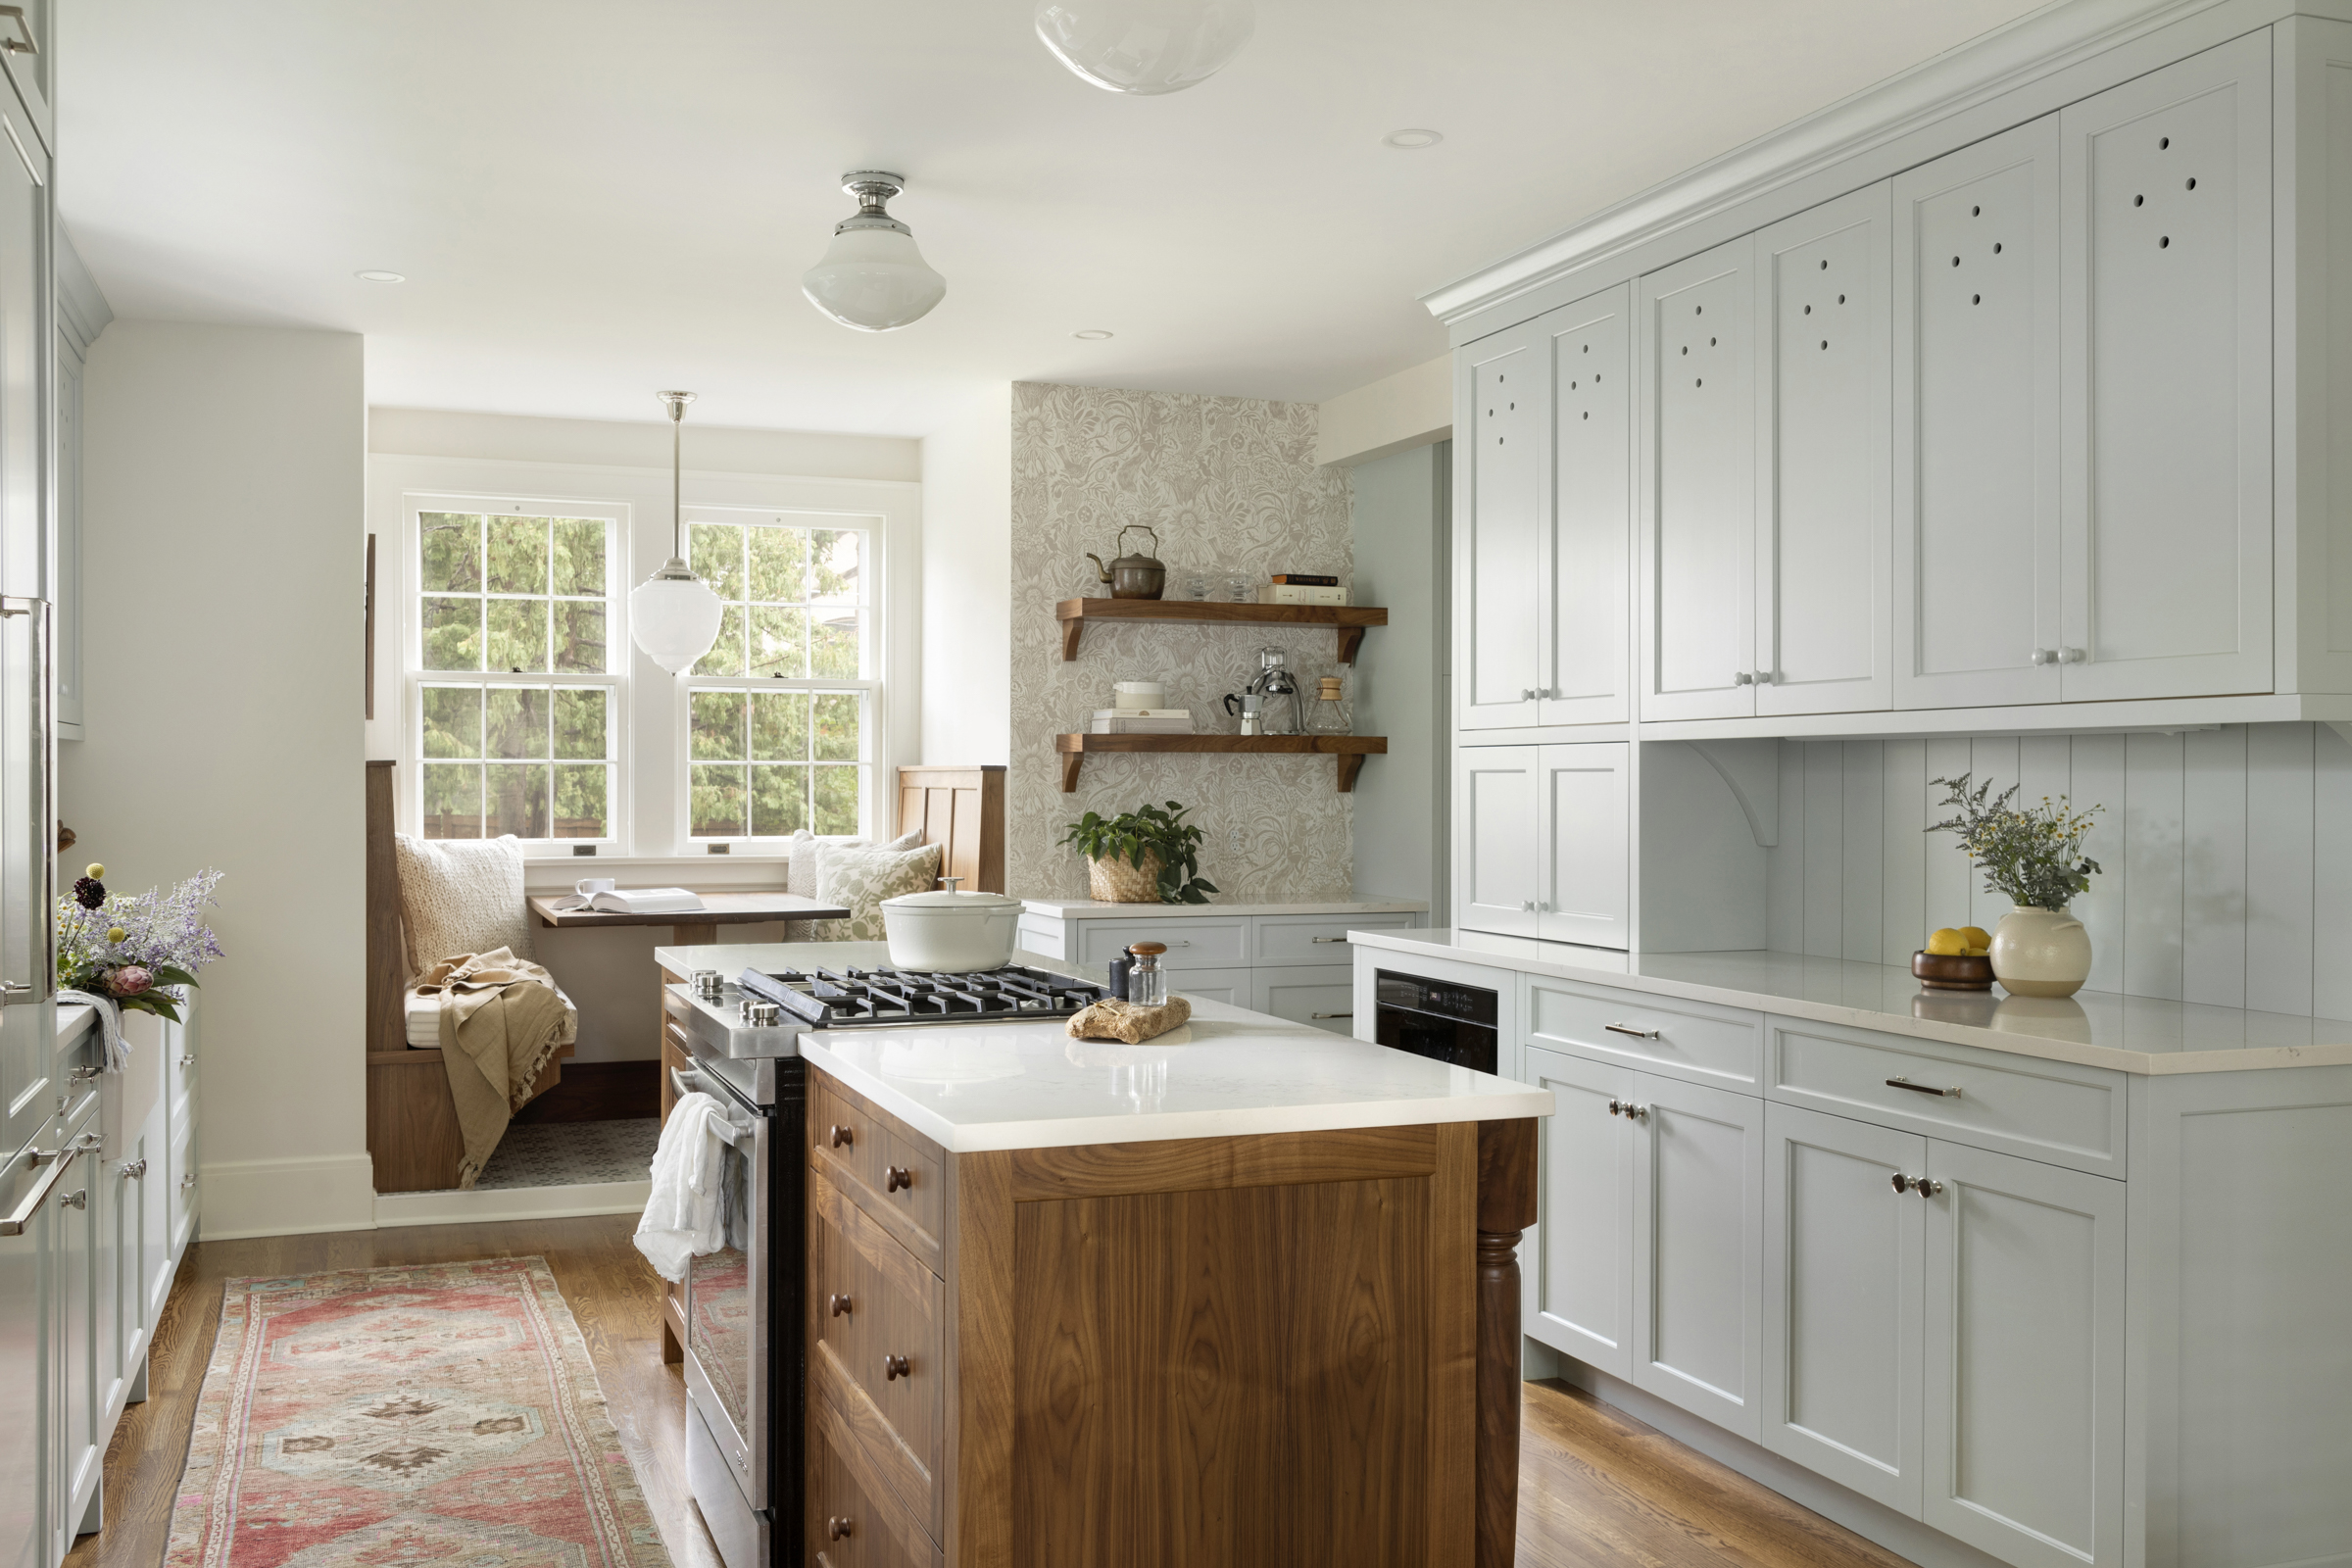 Custom blue kitchen cabinetry with walnut island quartz countertops, vintage lighting, wallpaper and open shelf details